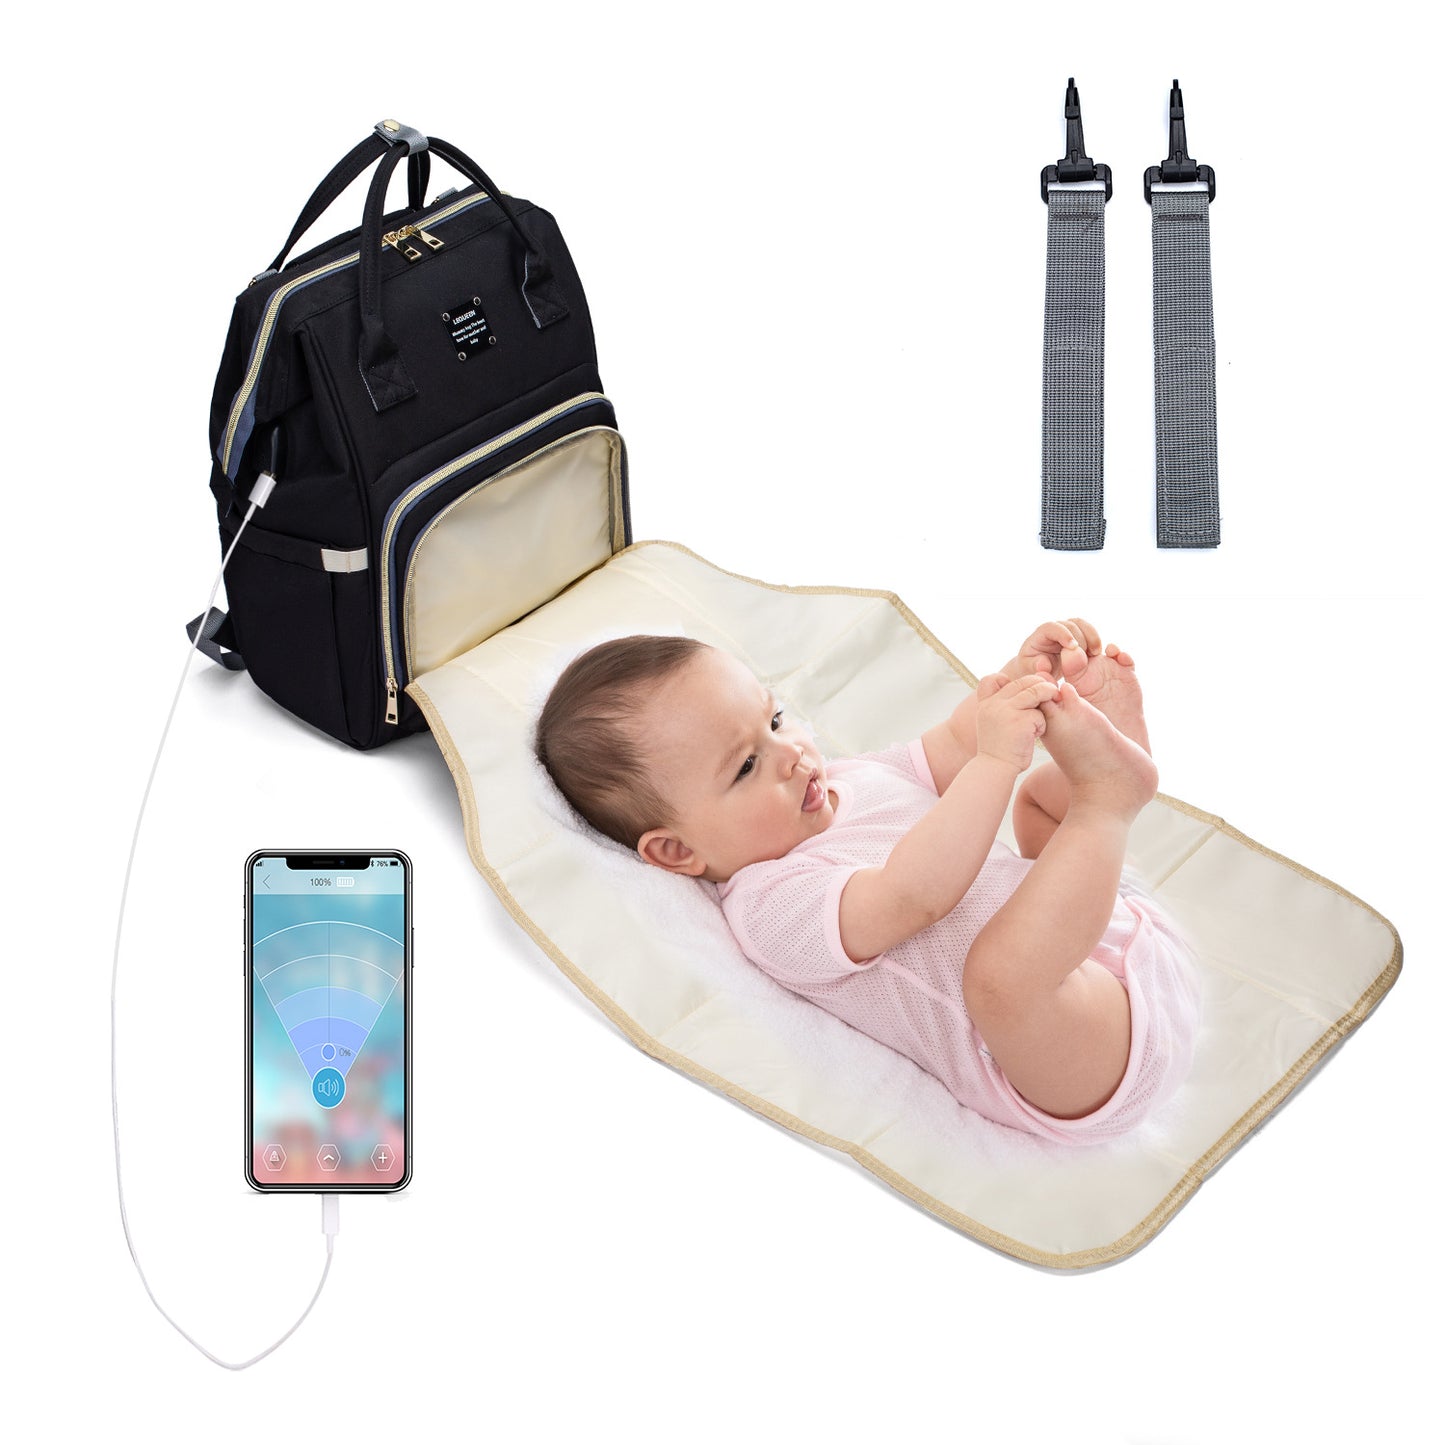 Multifunctional Large Capacity Mommy Backpack